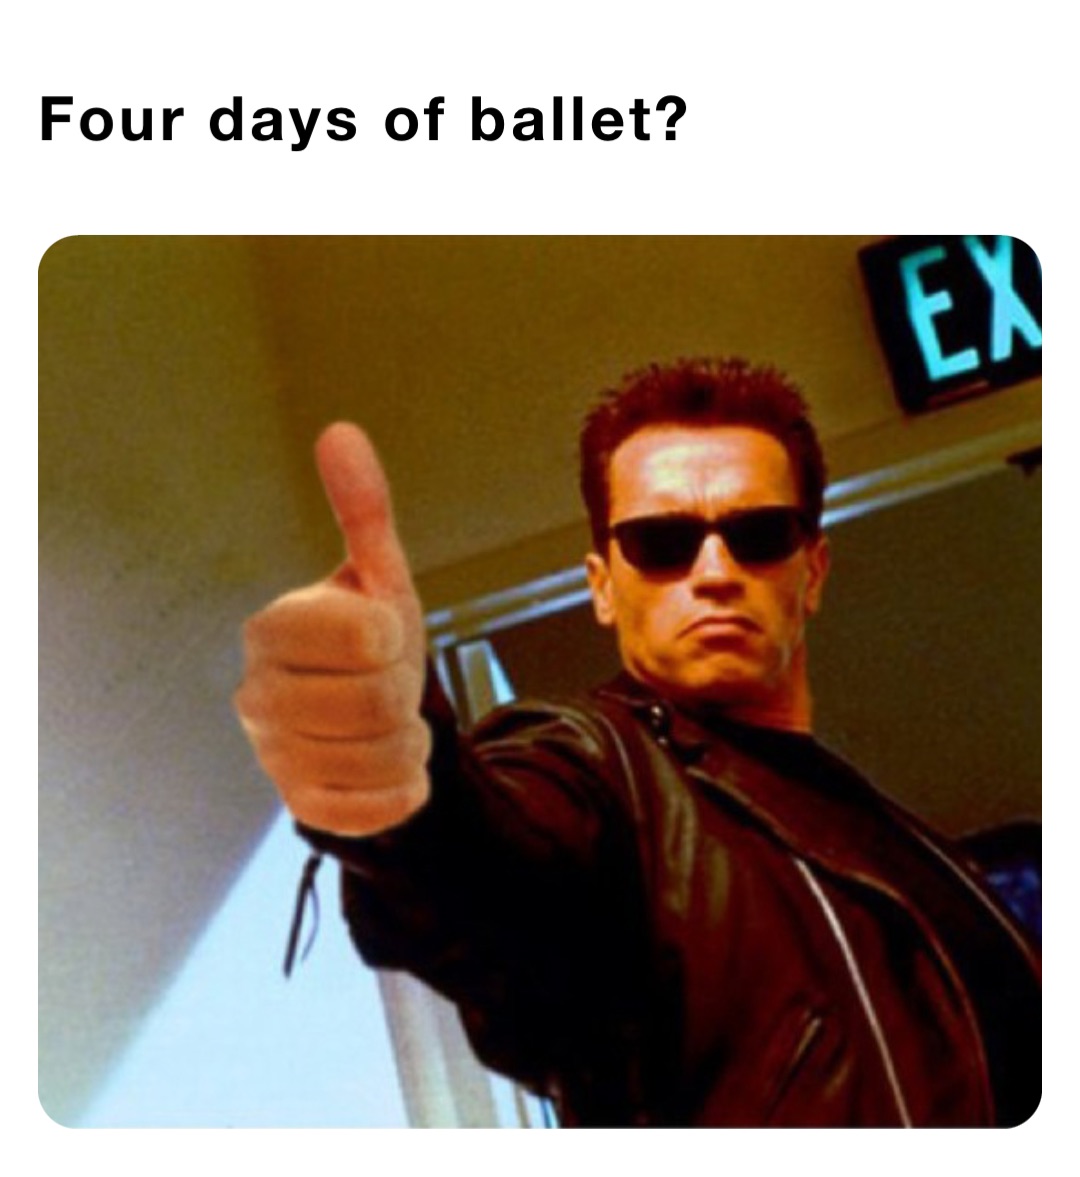 Four days of ballet?